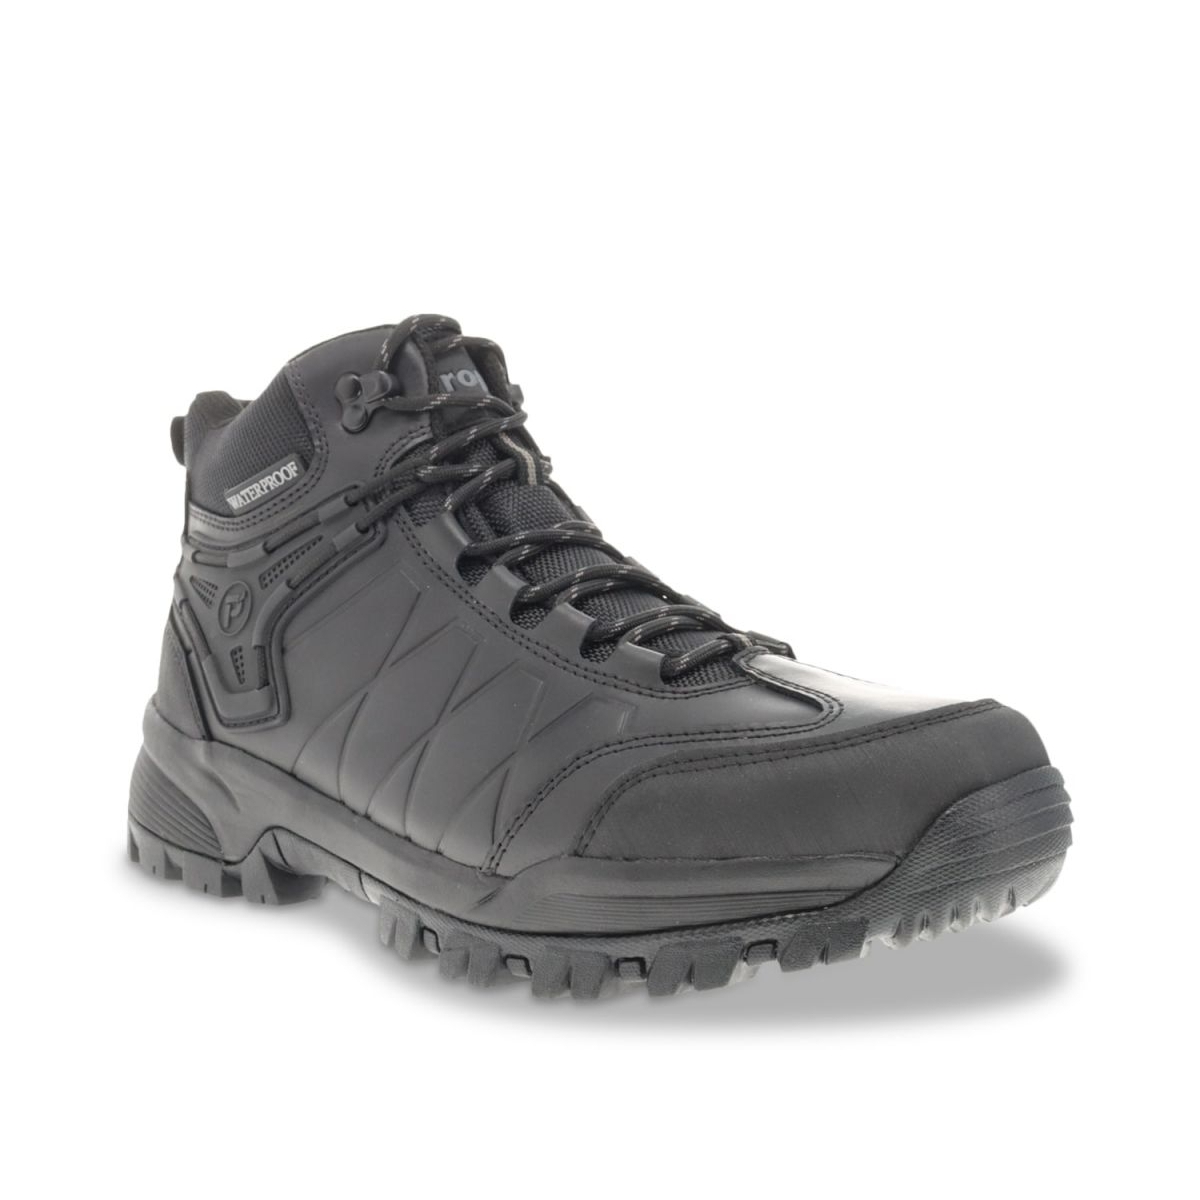 Propet Men's Ridge Walker Force Hiking Boots Black - MBA052LBLK BLACK - BLACK, 10 XX-Wide